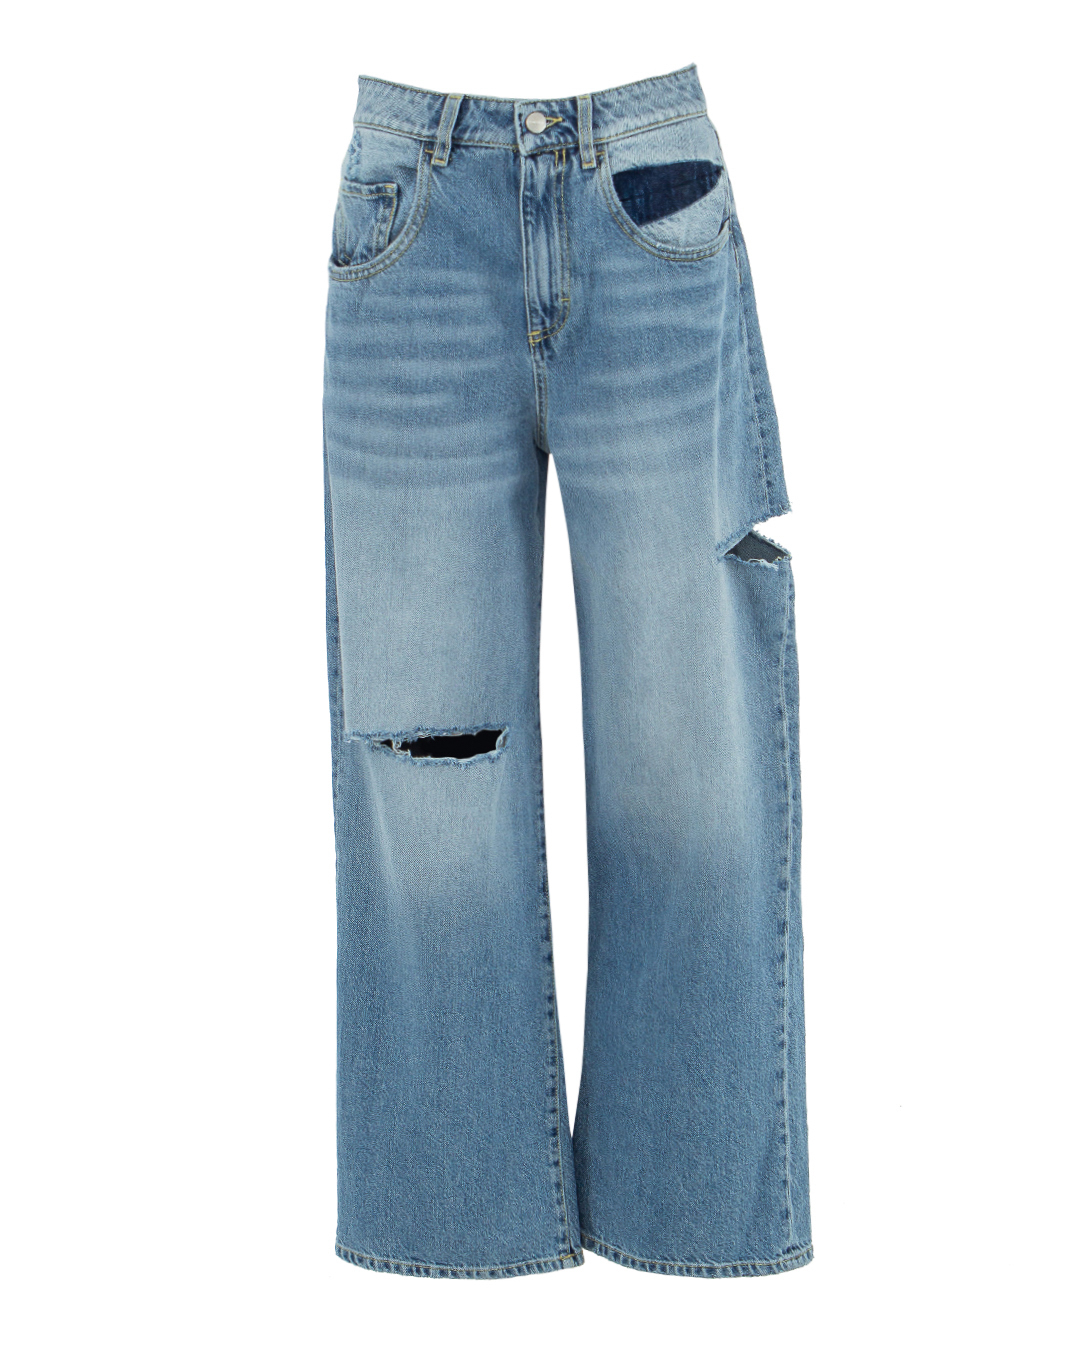 джинсы ICON DENIM POPPYID706 голубой 27, размер 27 - фото 1